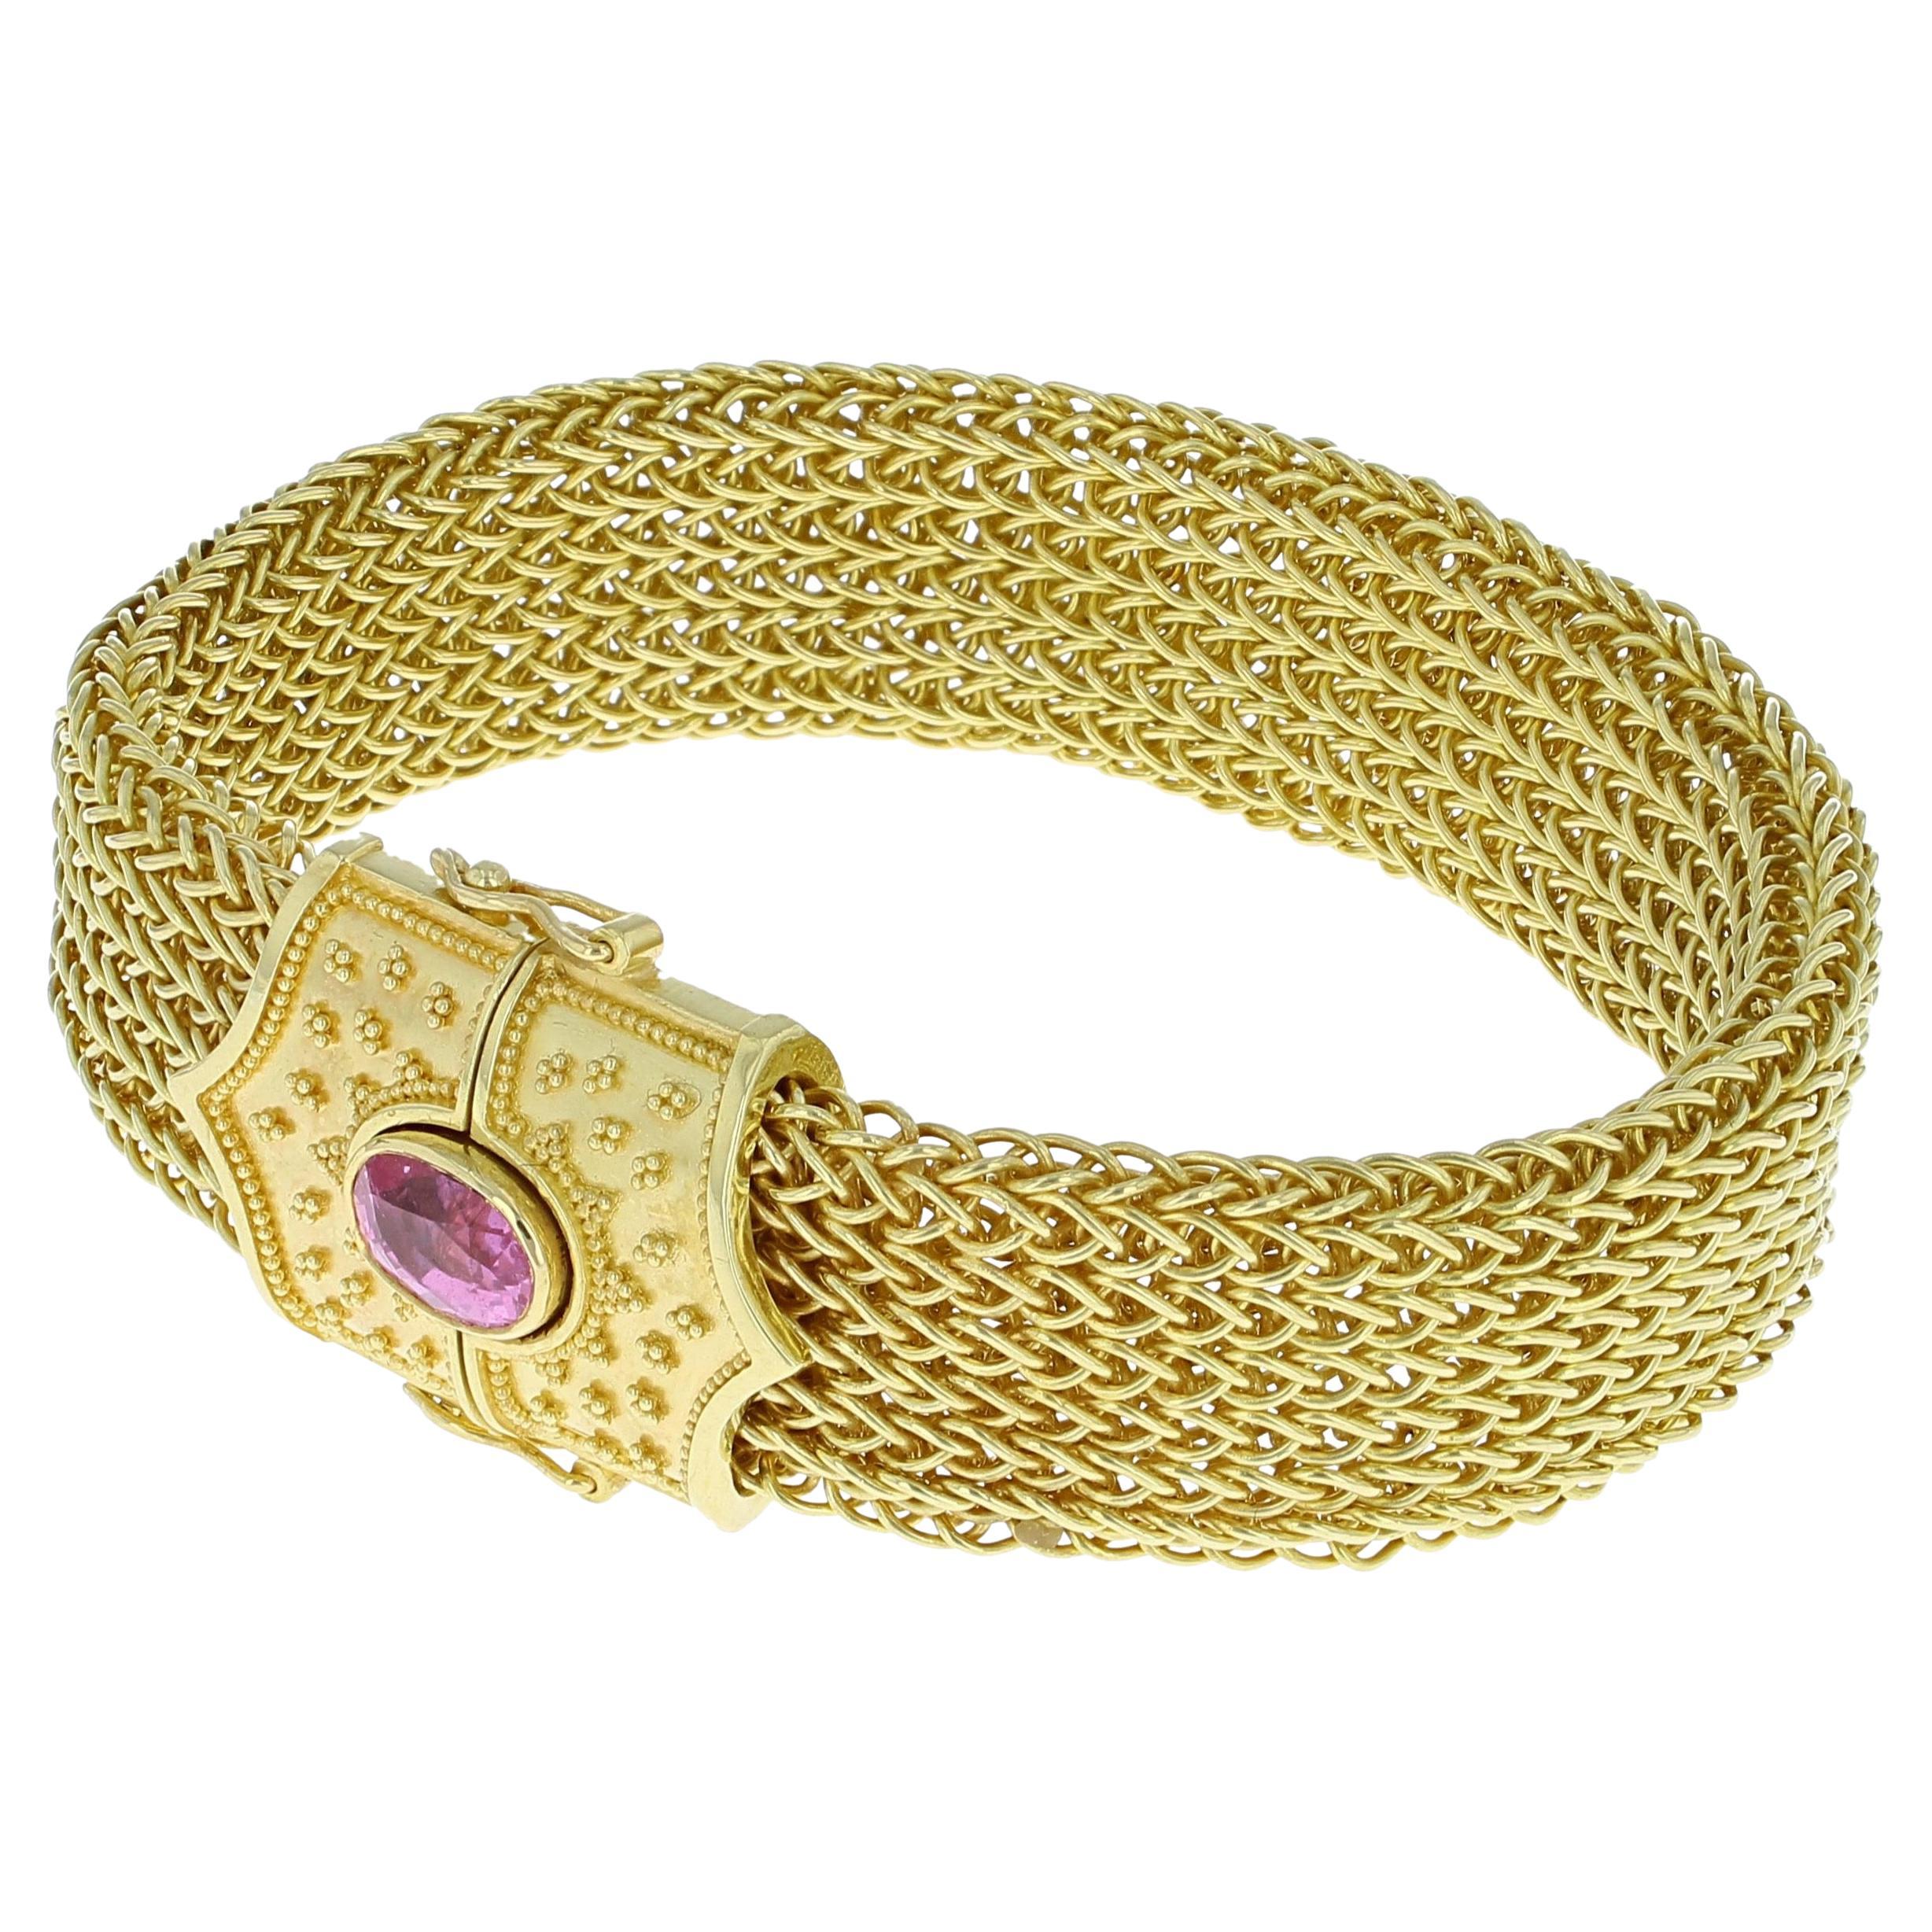 Kent Raible 18 Karat Gold Pink Sapphire Woven Chain Bracelet with Granulation